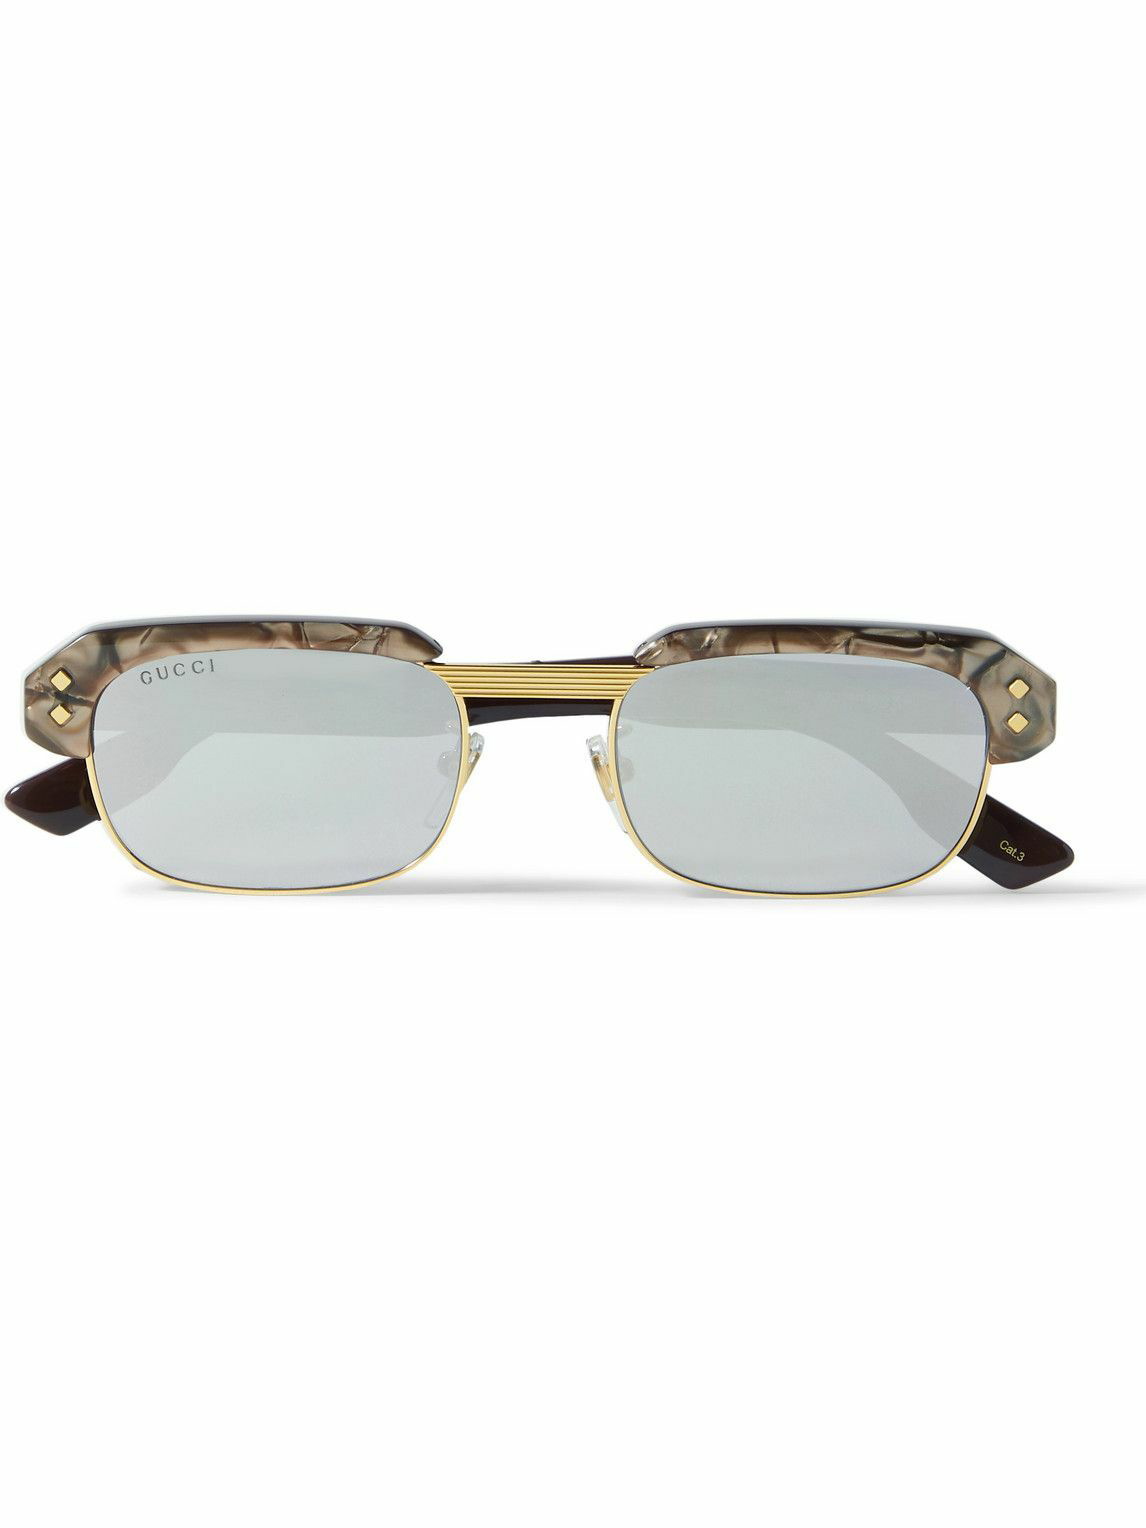 Gucci Eyewear - Rectangular-Frame Acetate and Gold-Tone Sunglasses Gucci